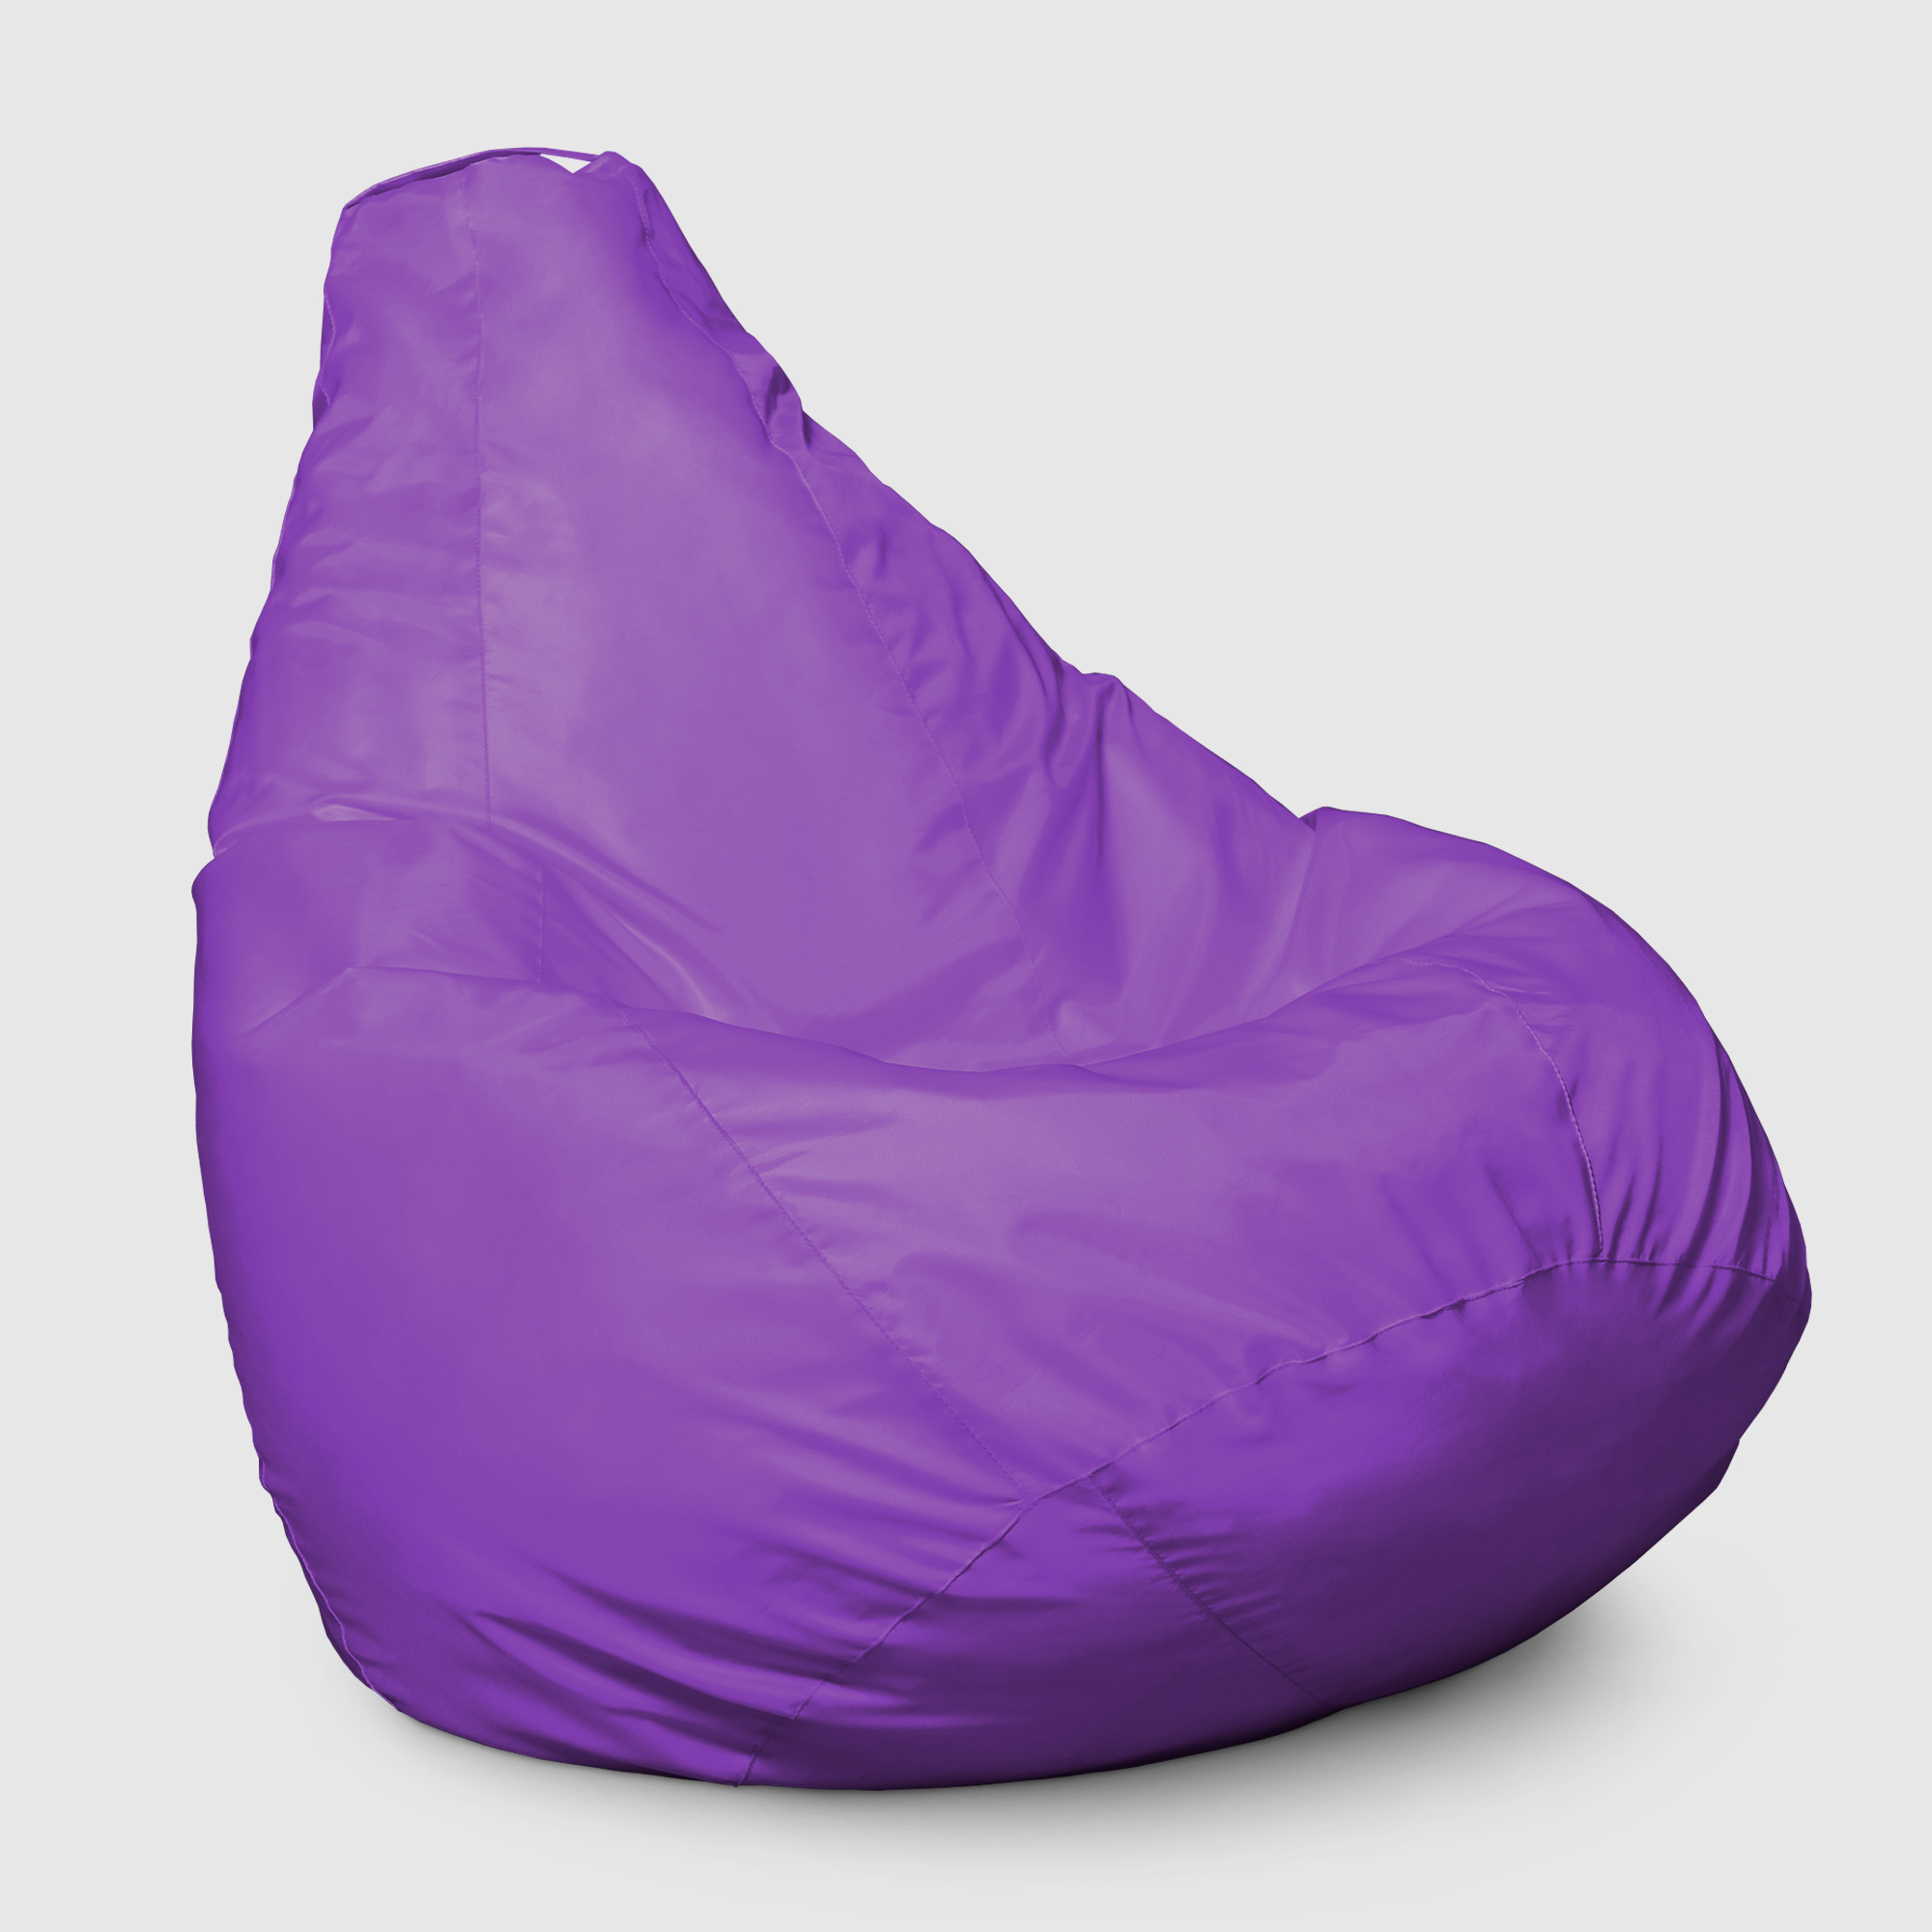 Кресло мешок Dreambag Меган xl фиолетовое 85х85х125 см кресло мешок dreambag тиффани xl желтый 85х85х125 см